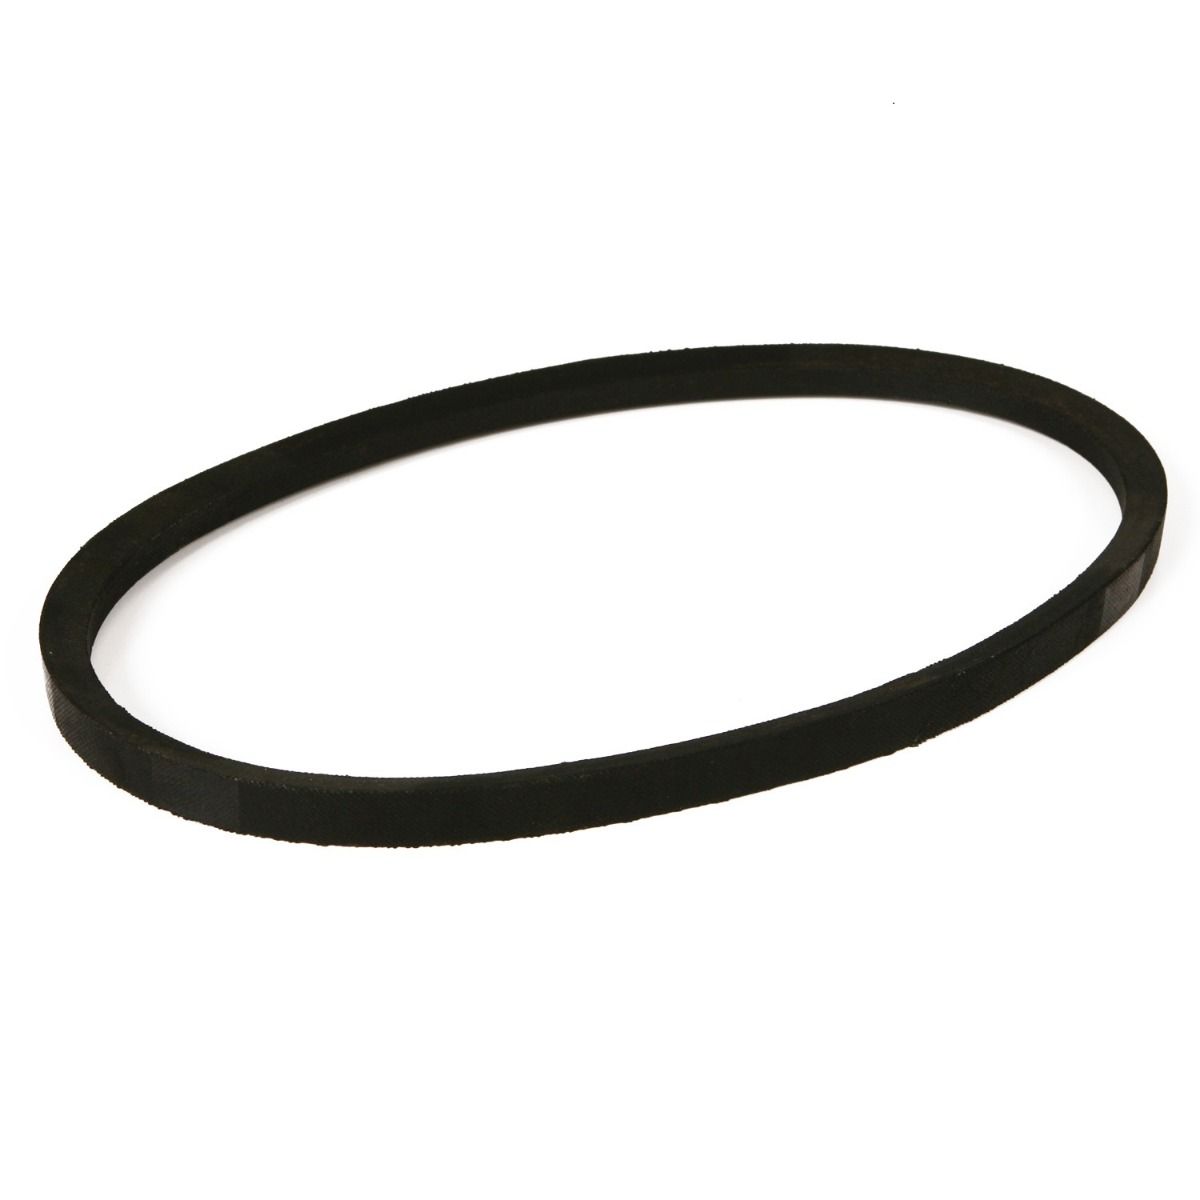 BESTORQ 2/B66 Rubber V-Belt 69 Length x 1.41 Width x 0.55 Height Banded Black 